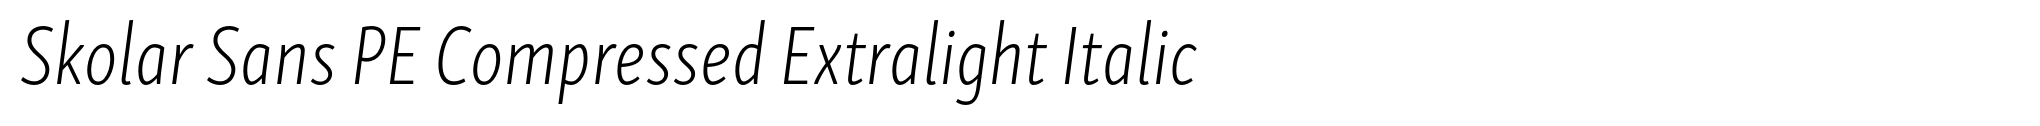 Skolar Sans PE Compressed Extralight Italic image